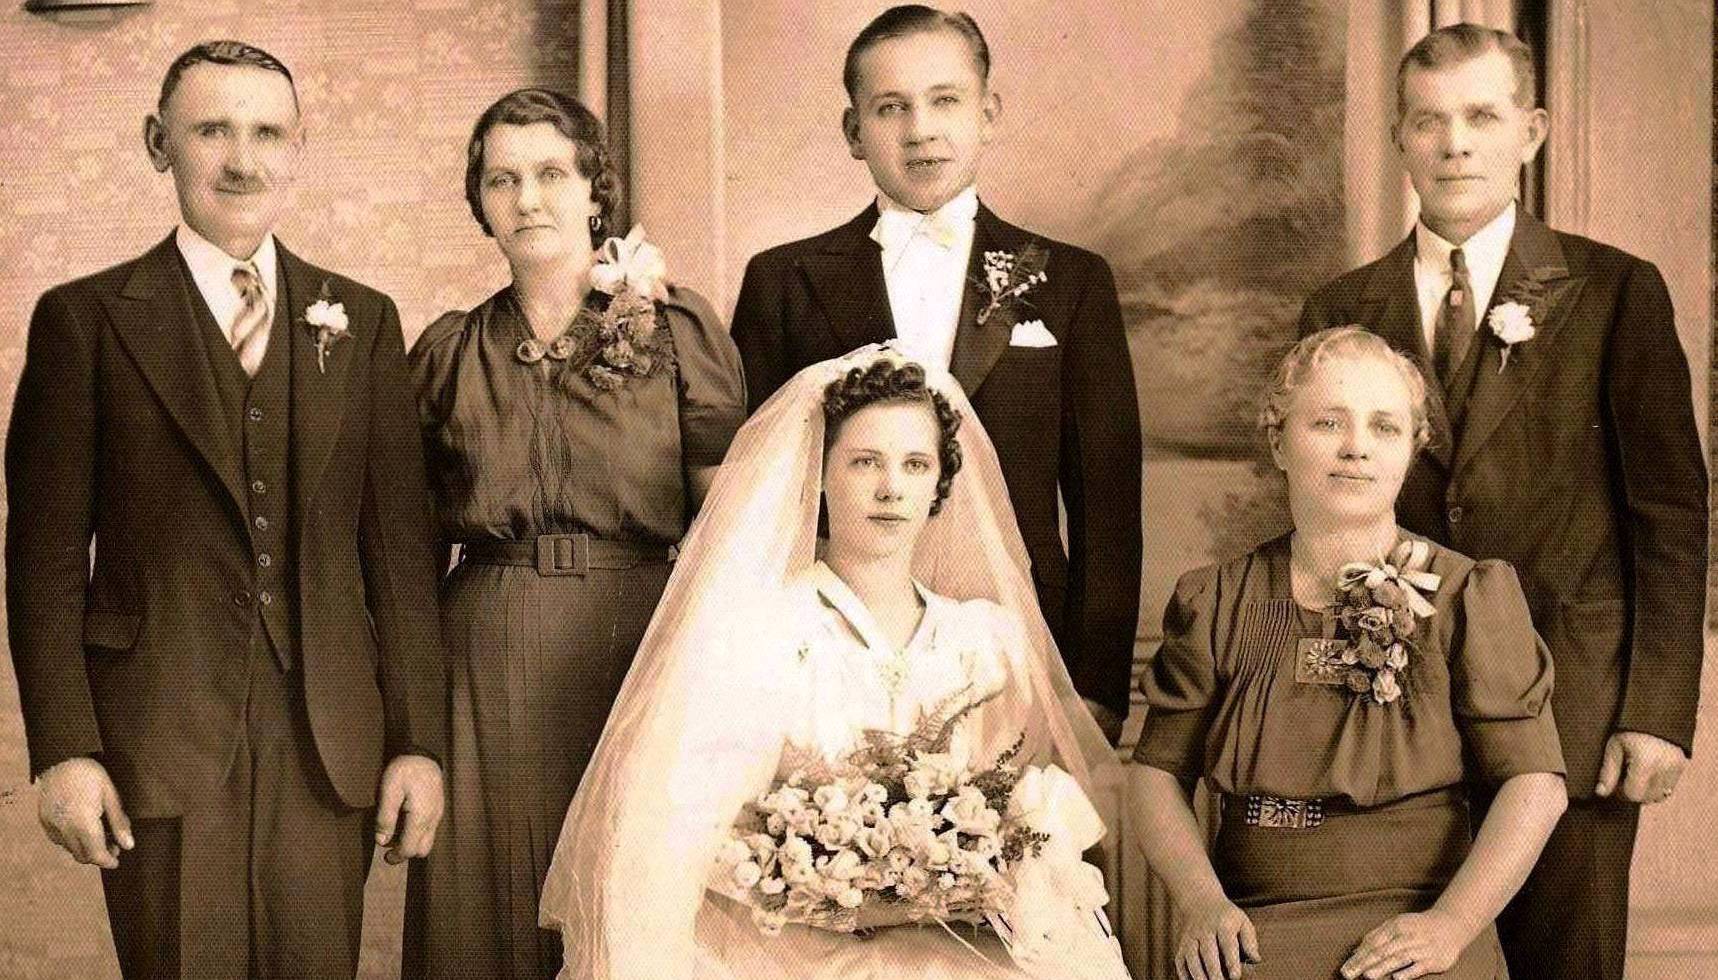 John Niziol and Angeline Orwatt Wedding 18 Nov 1939